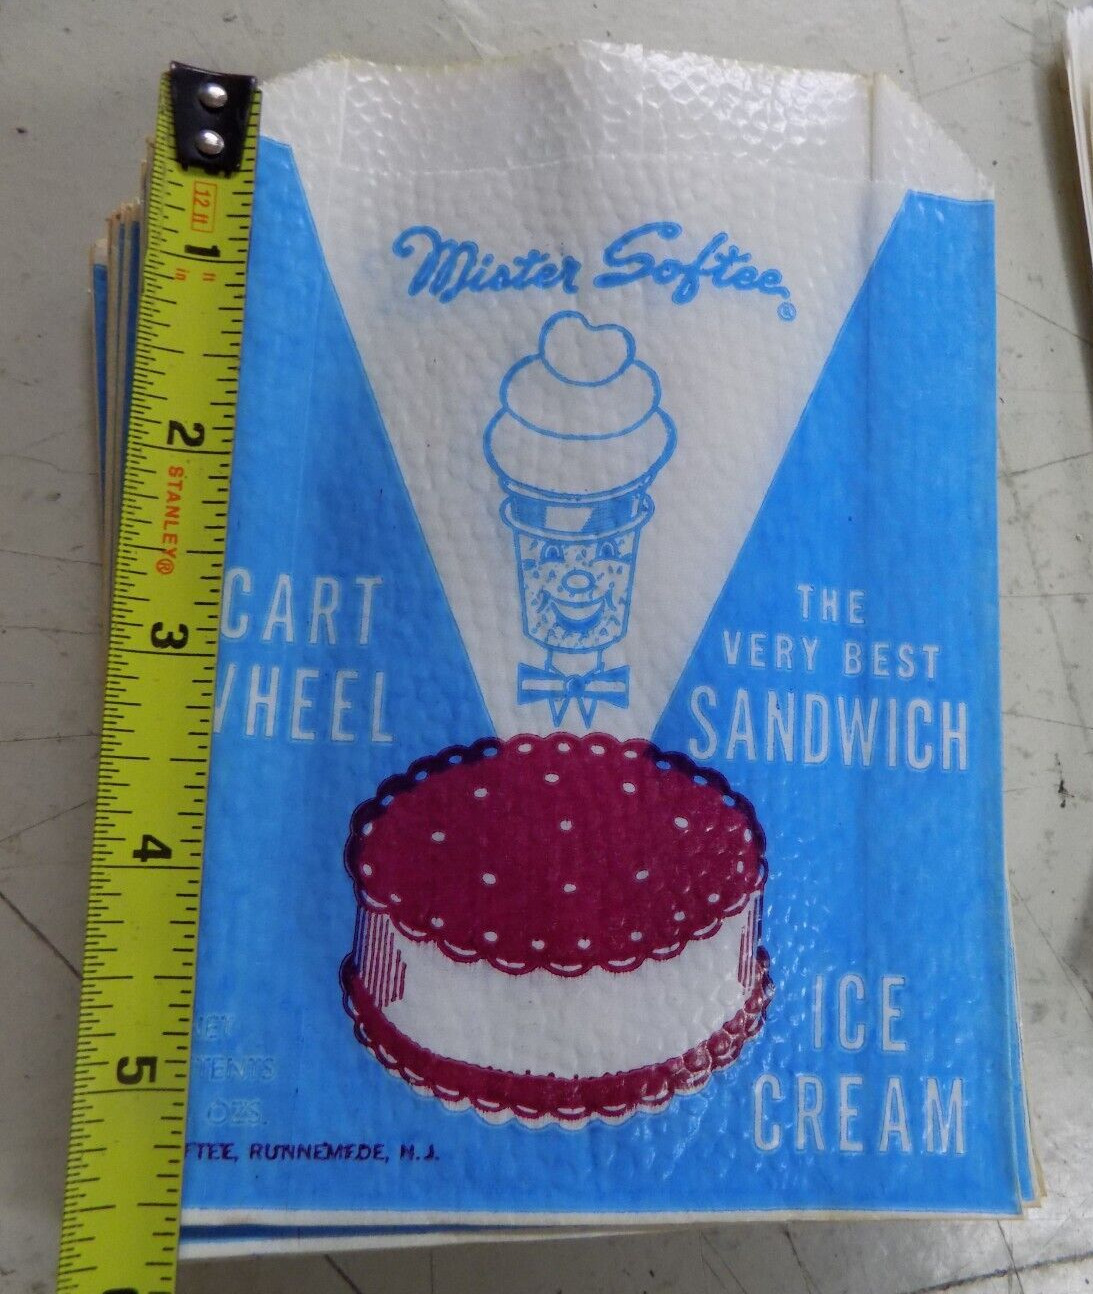 Advertising NOS original Mister Softee Cart Wheel Ice Cream Bag perfect to frame